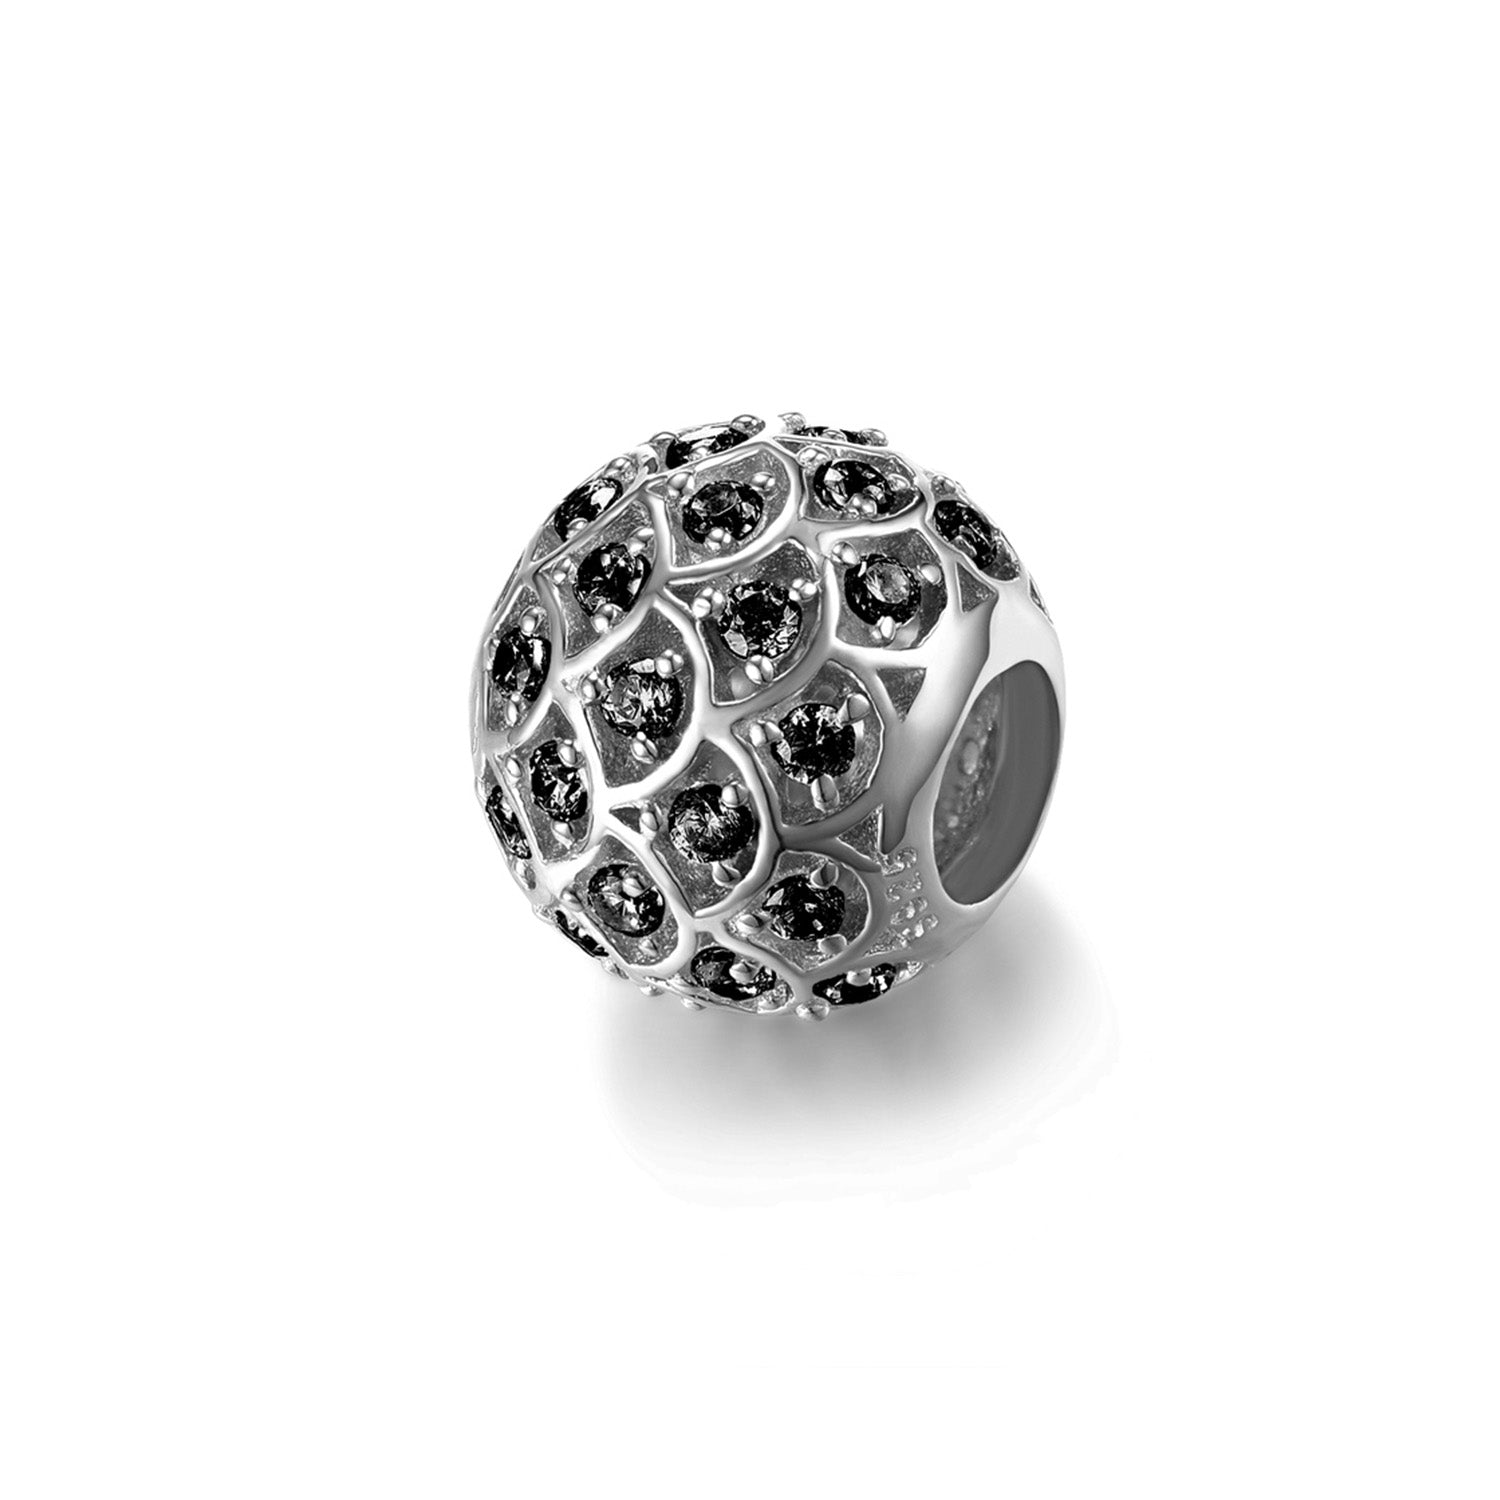 Jewdii 925 純銀時尚吊飾黑色方晶鋯石適合歐式串珠腕帶手鍊或項鍊